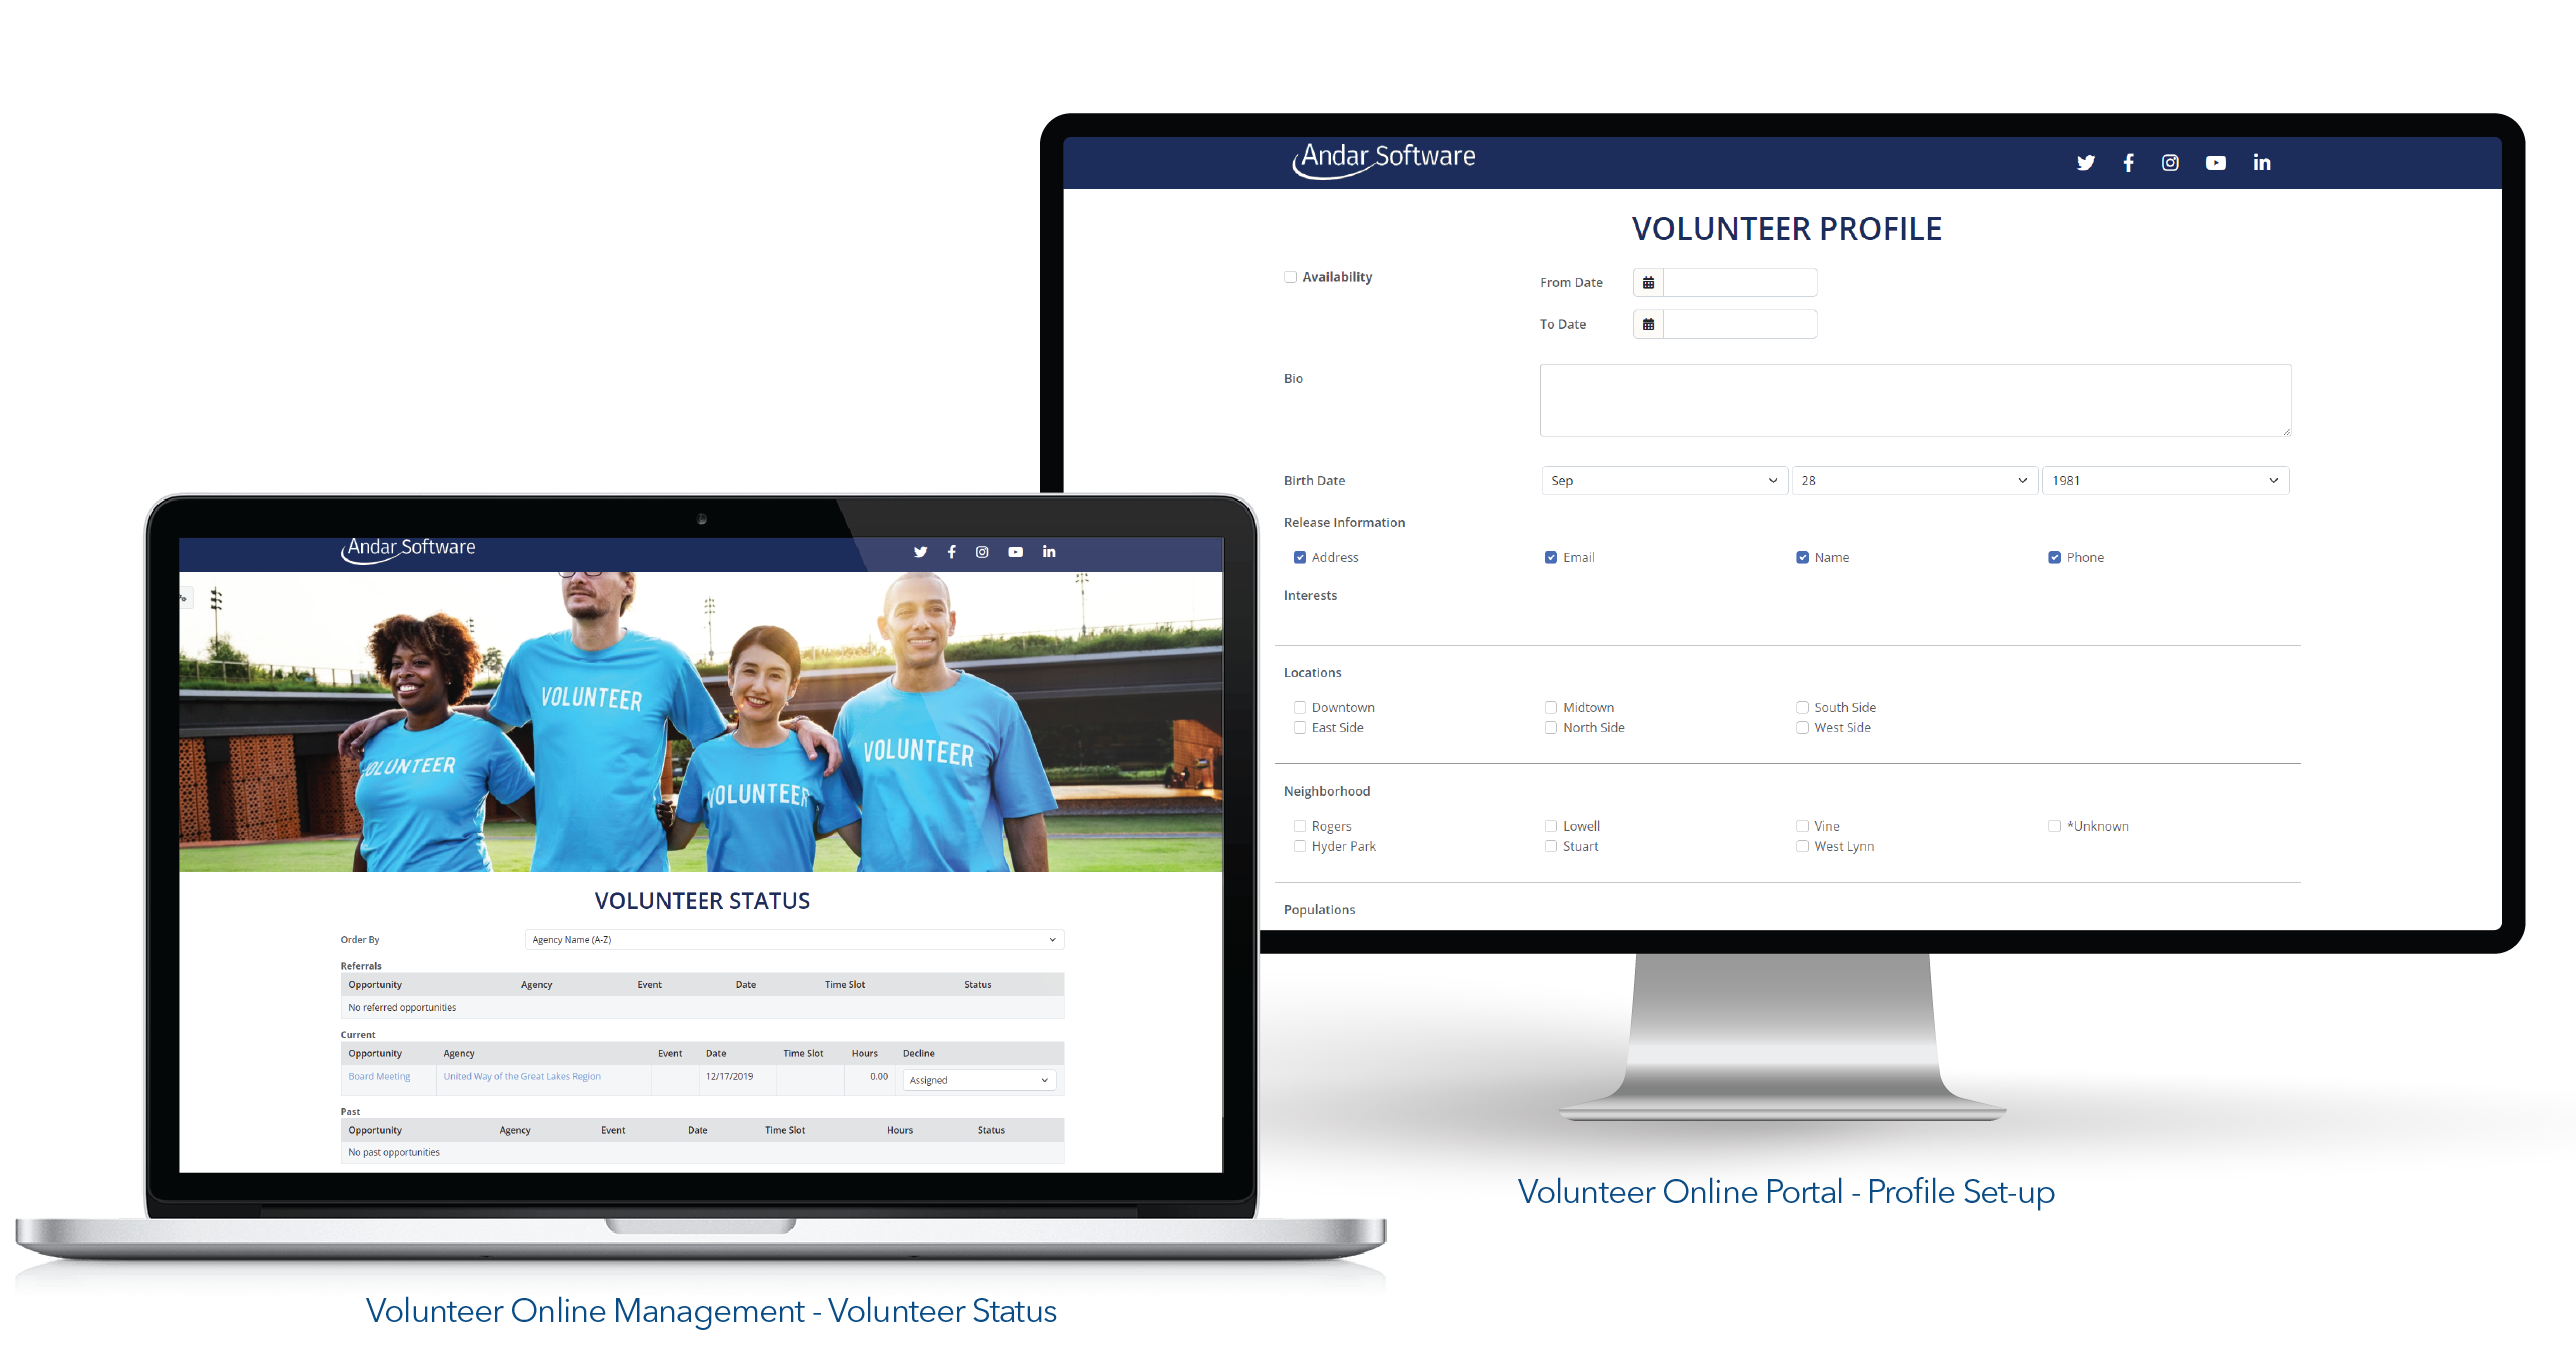 e-Volunteer, an add-on module supporting online volunteer management.